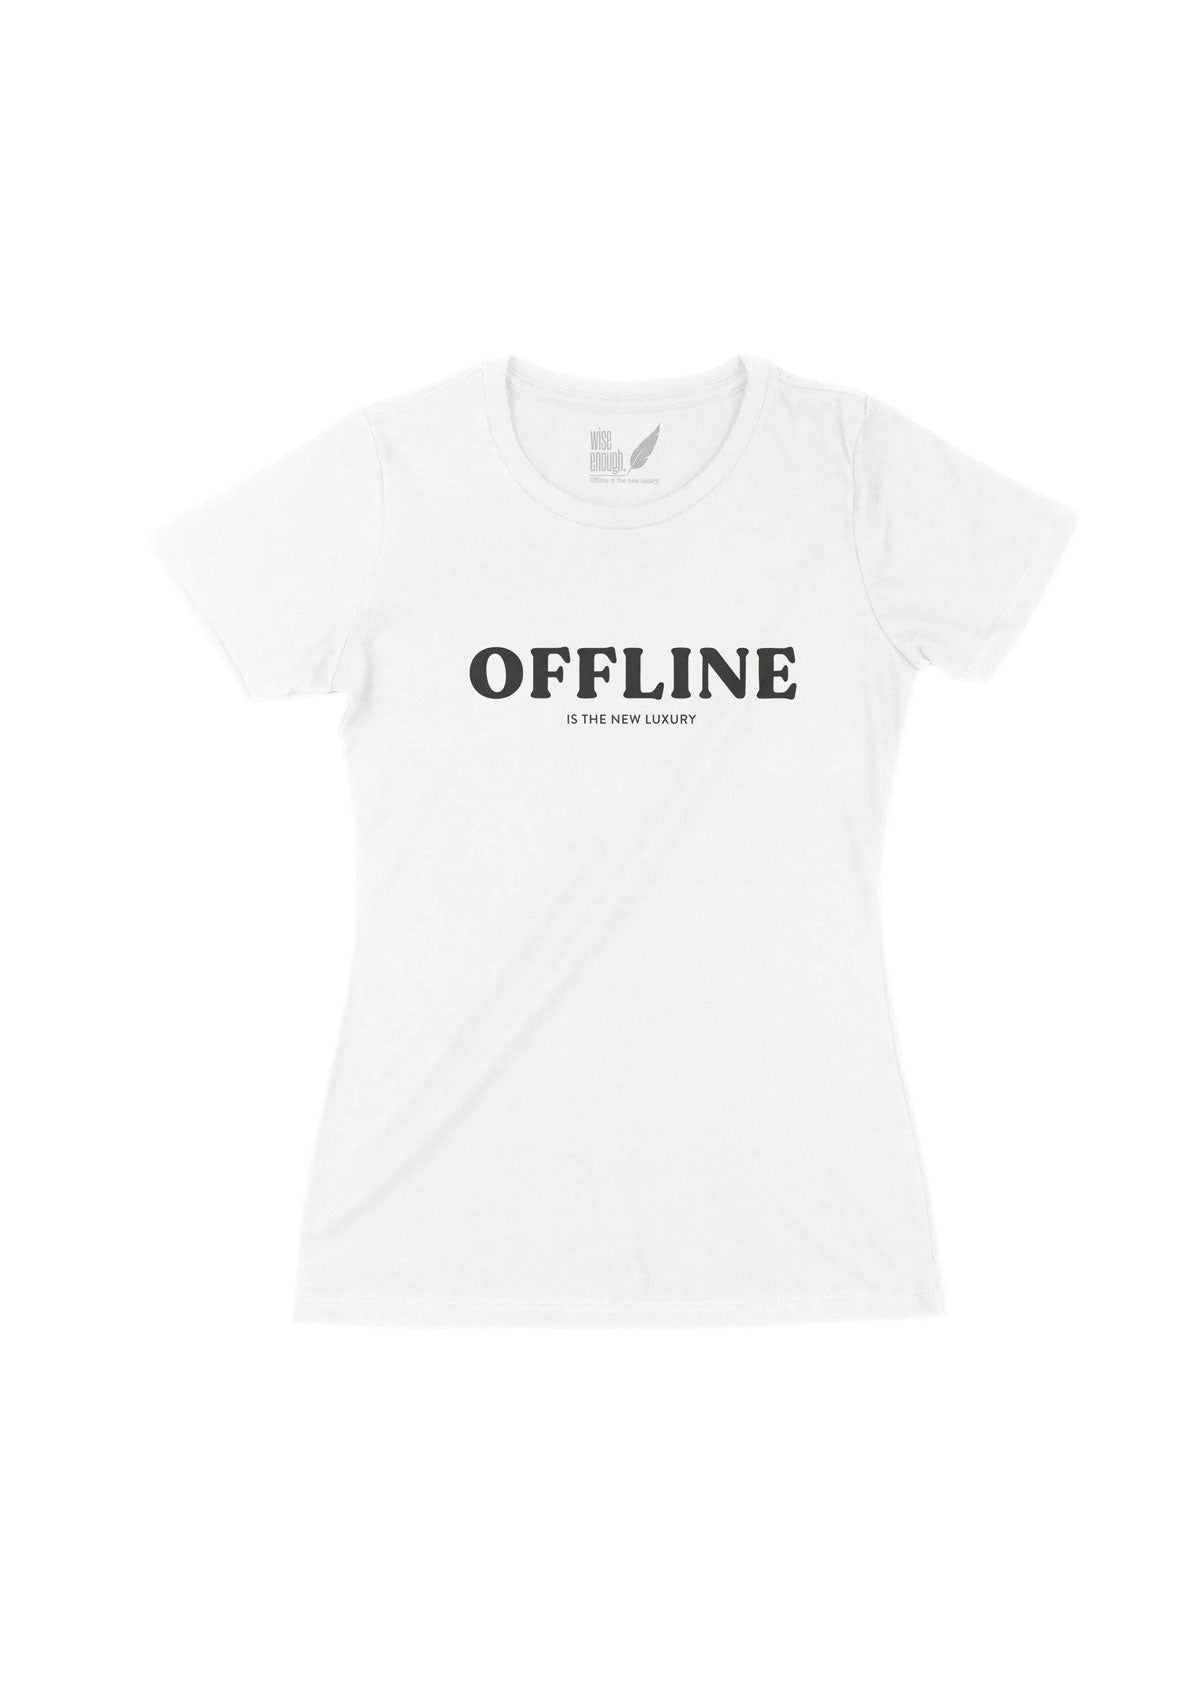 T-Shirt Offline - wise enough